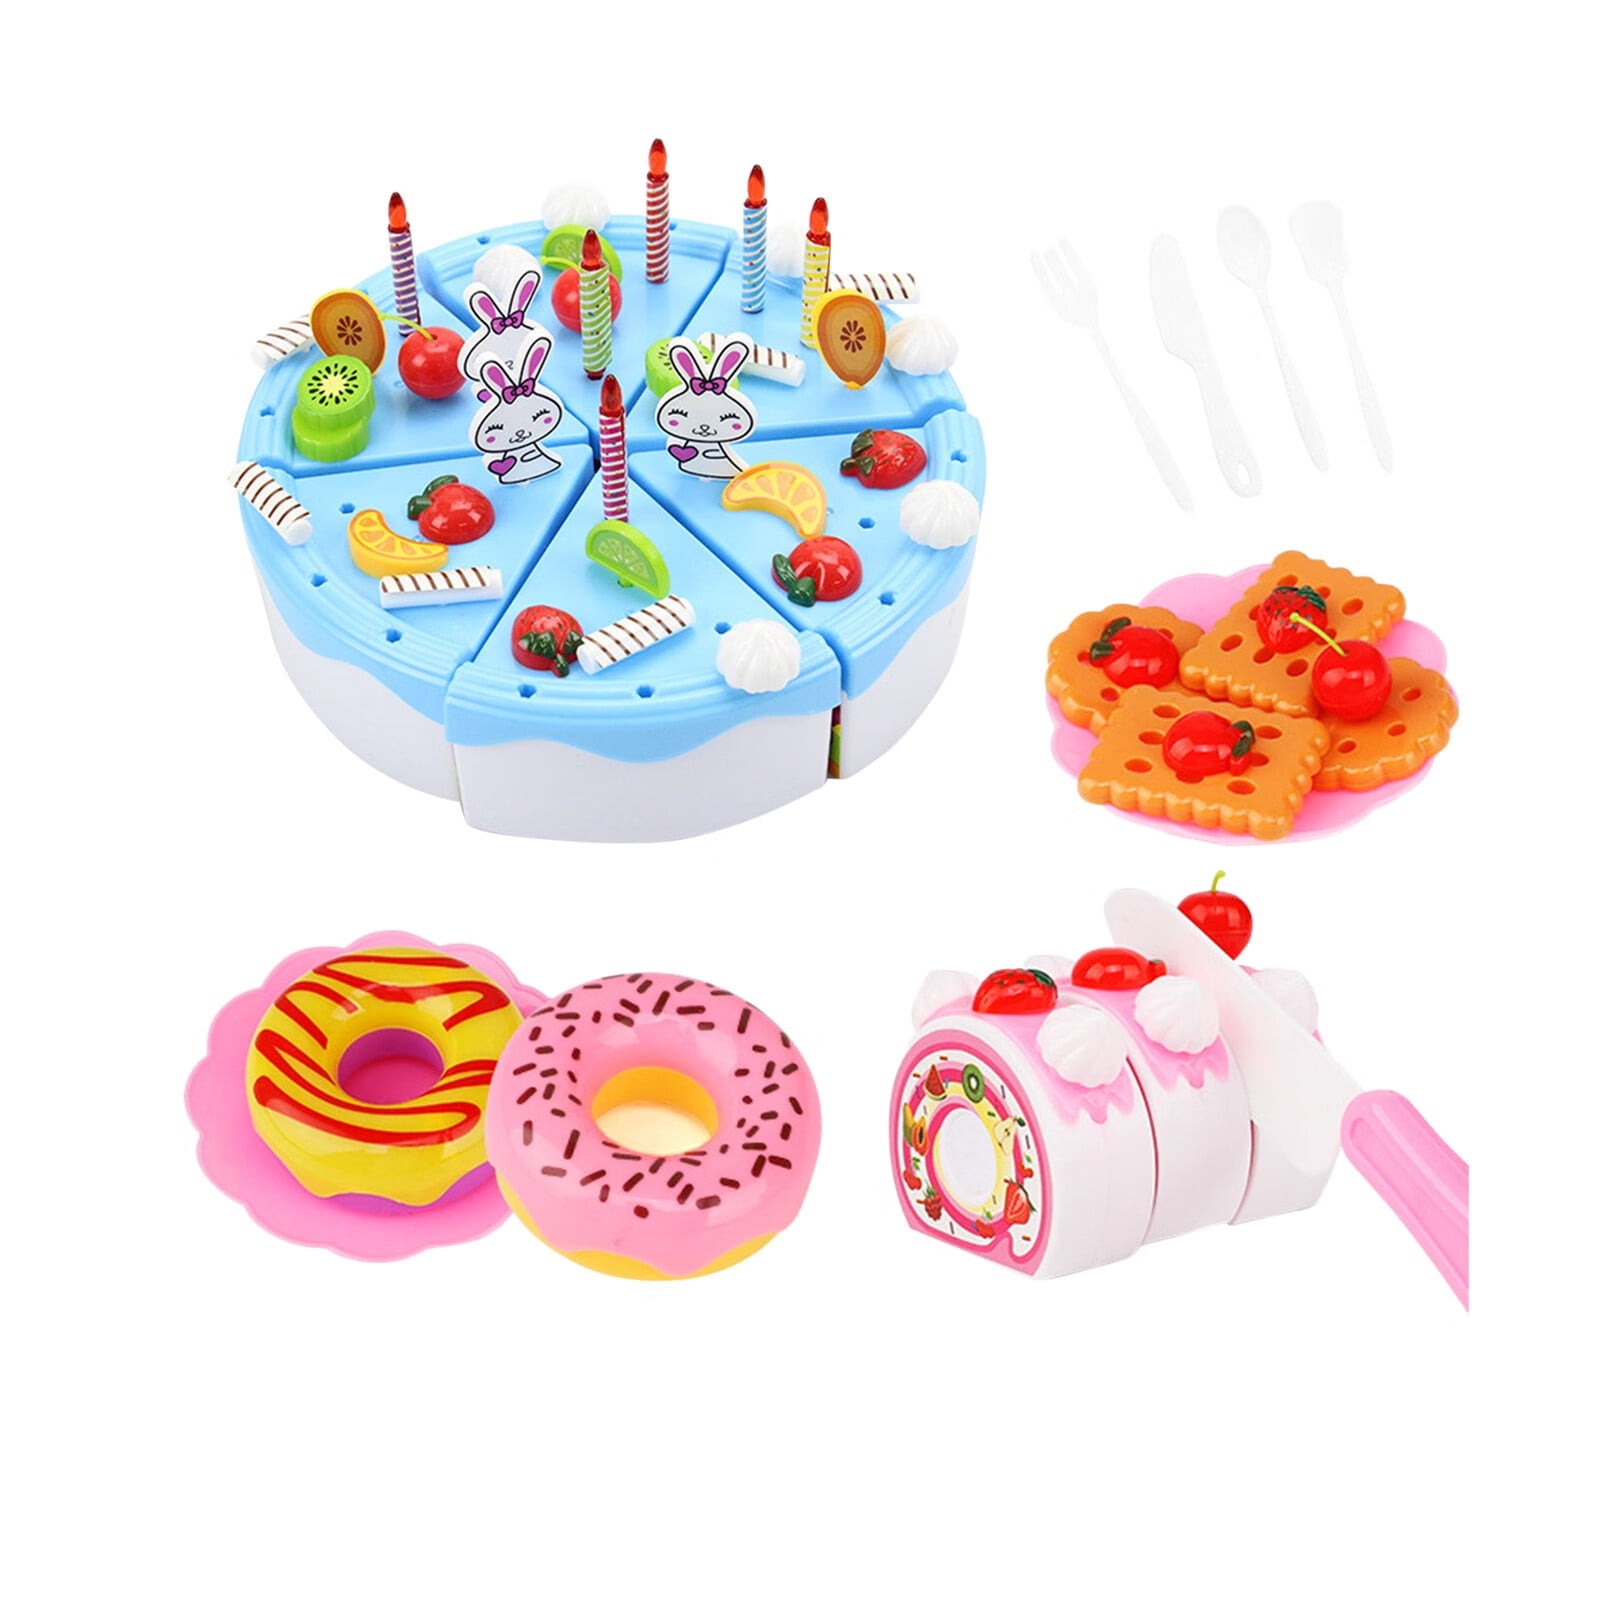 22 Kitchen cakes ideas | themed cakes, cupcake cakes, chef cake